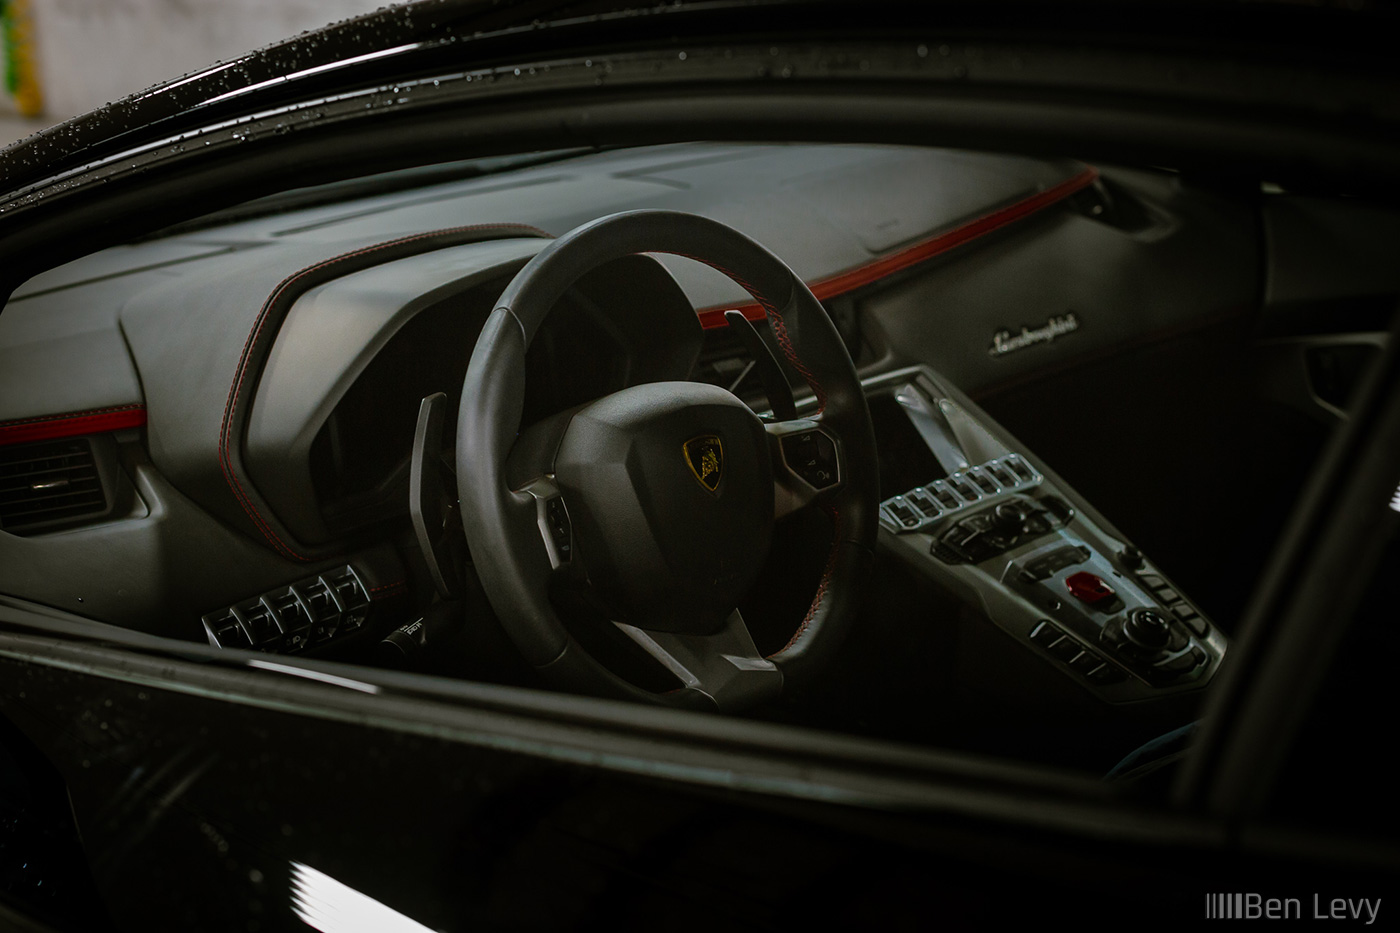 Lamborghini Aventador S Steering Wheel